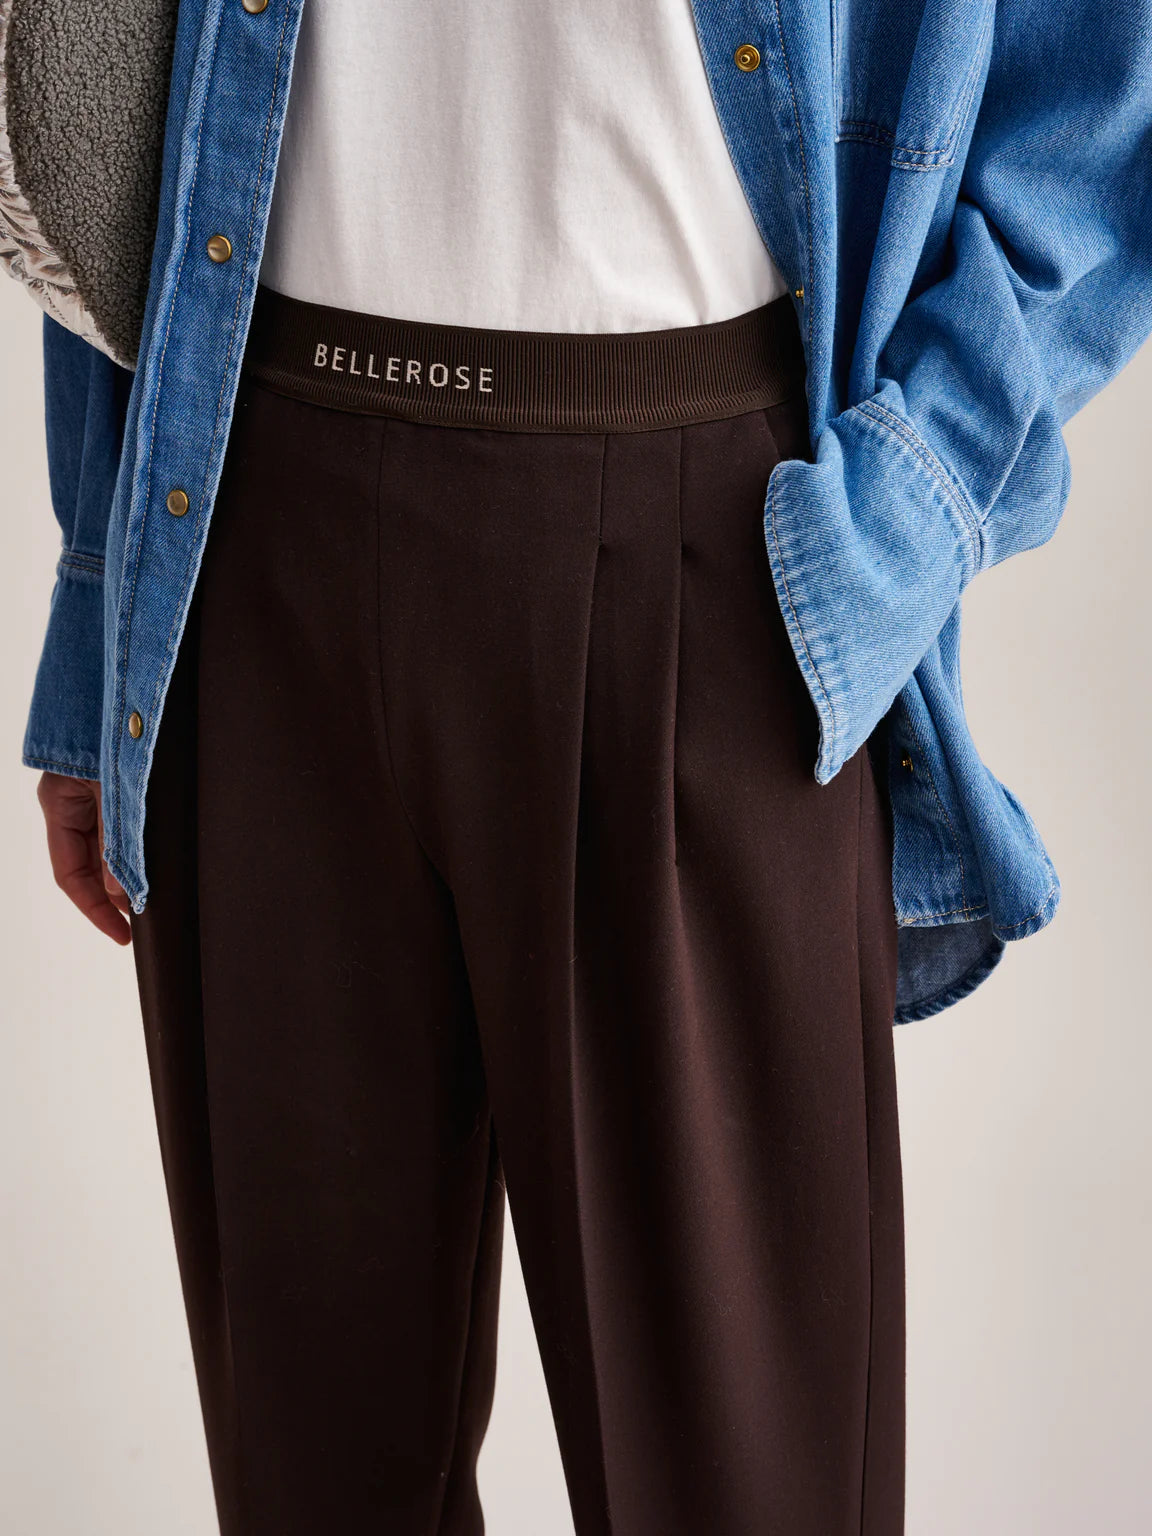 Bellerose Seoul Trousers